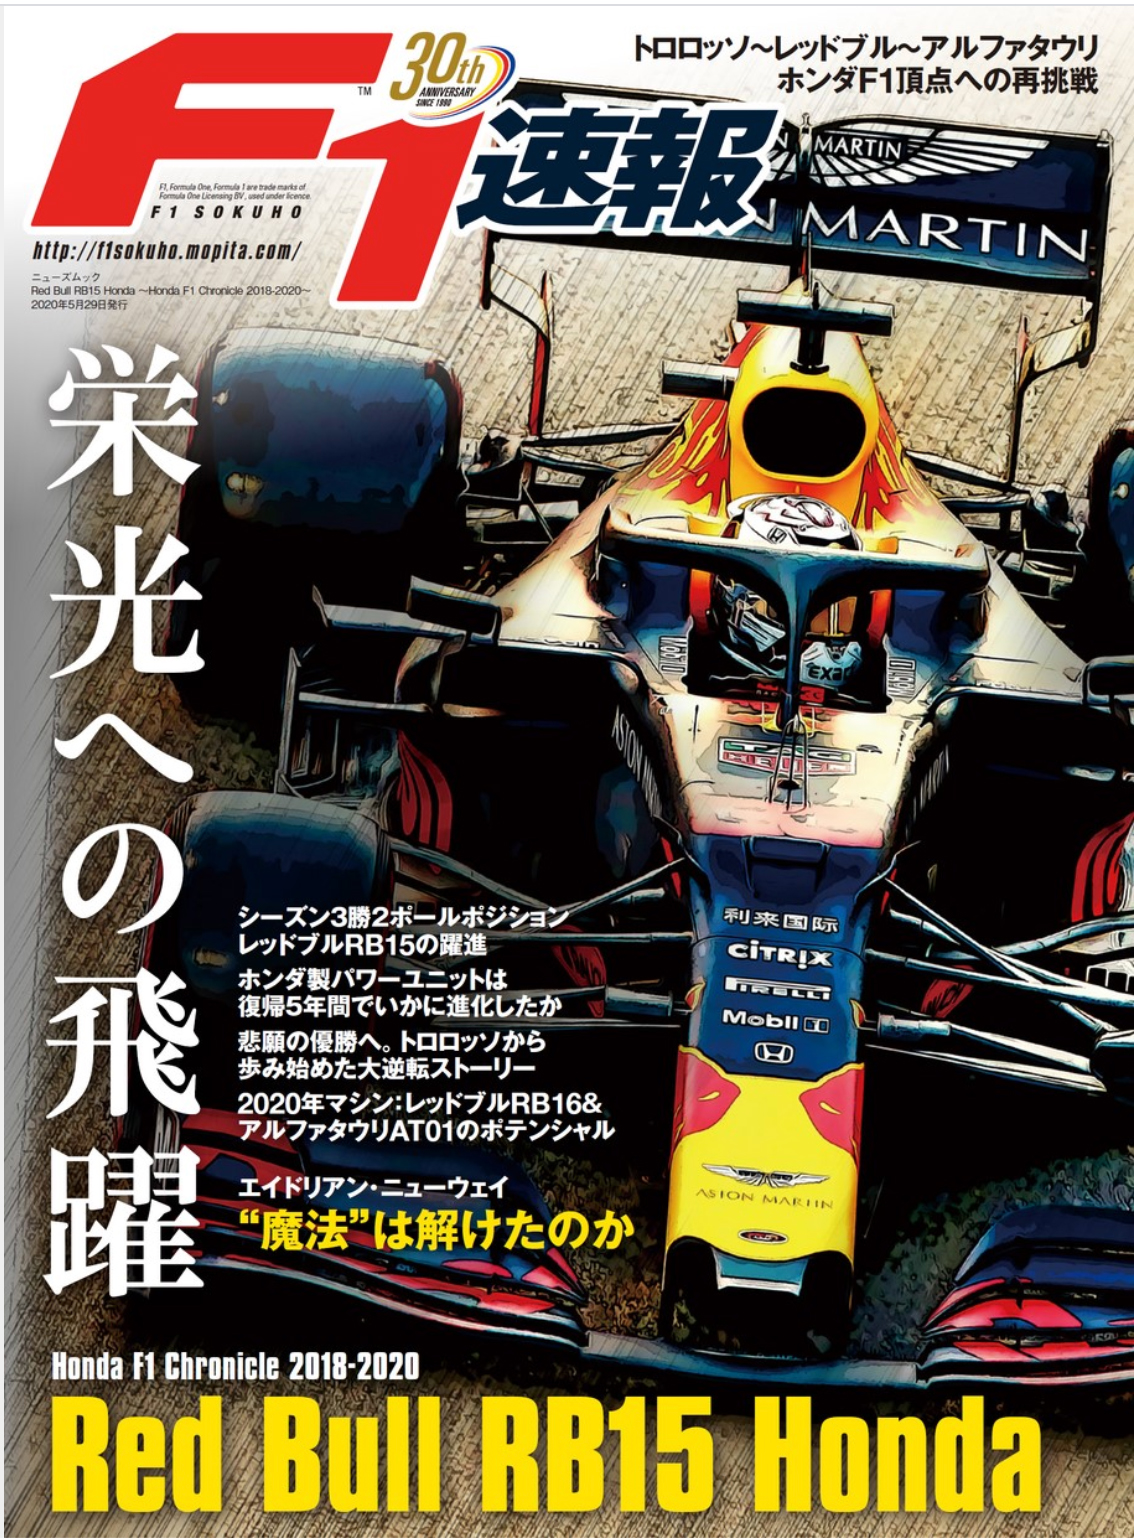 F1速報 特別編集 ホンダとレッドブル 共闘３年間の歴史を綴った Red Bull Rb15 Honda Honda F1 Chronicle 2018 2020 4月15日発売 三栄のプレスリリース